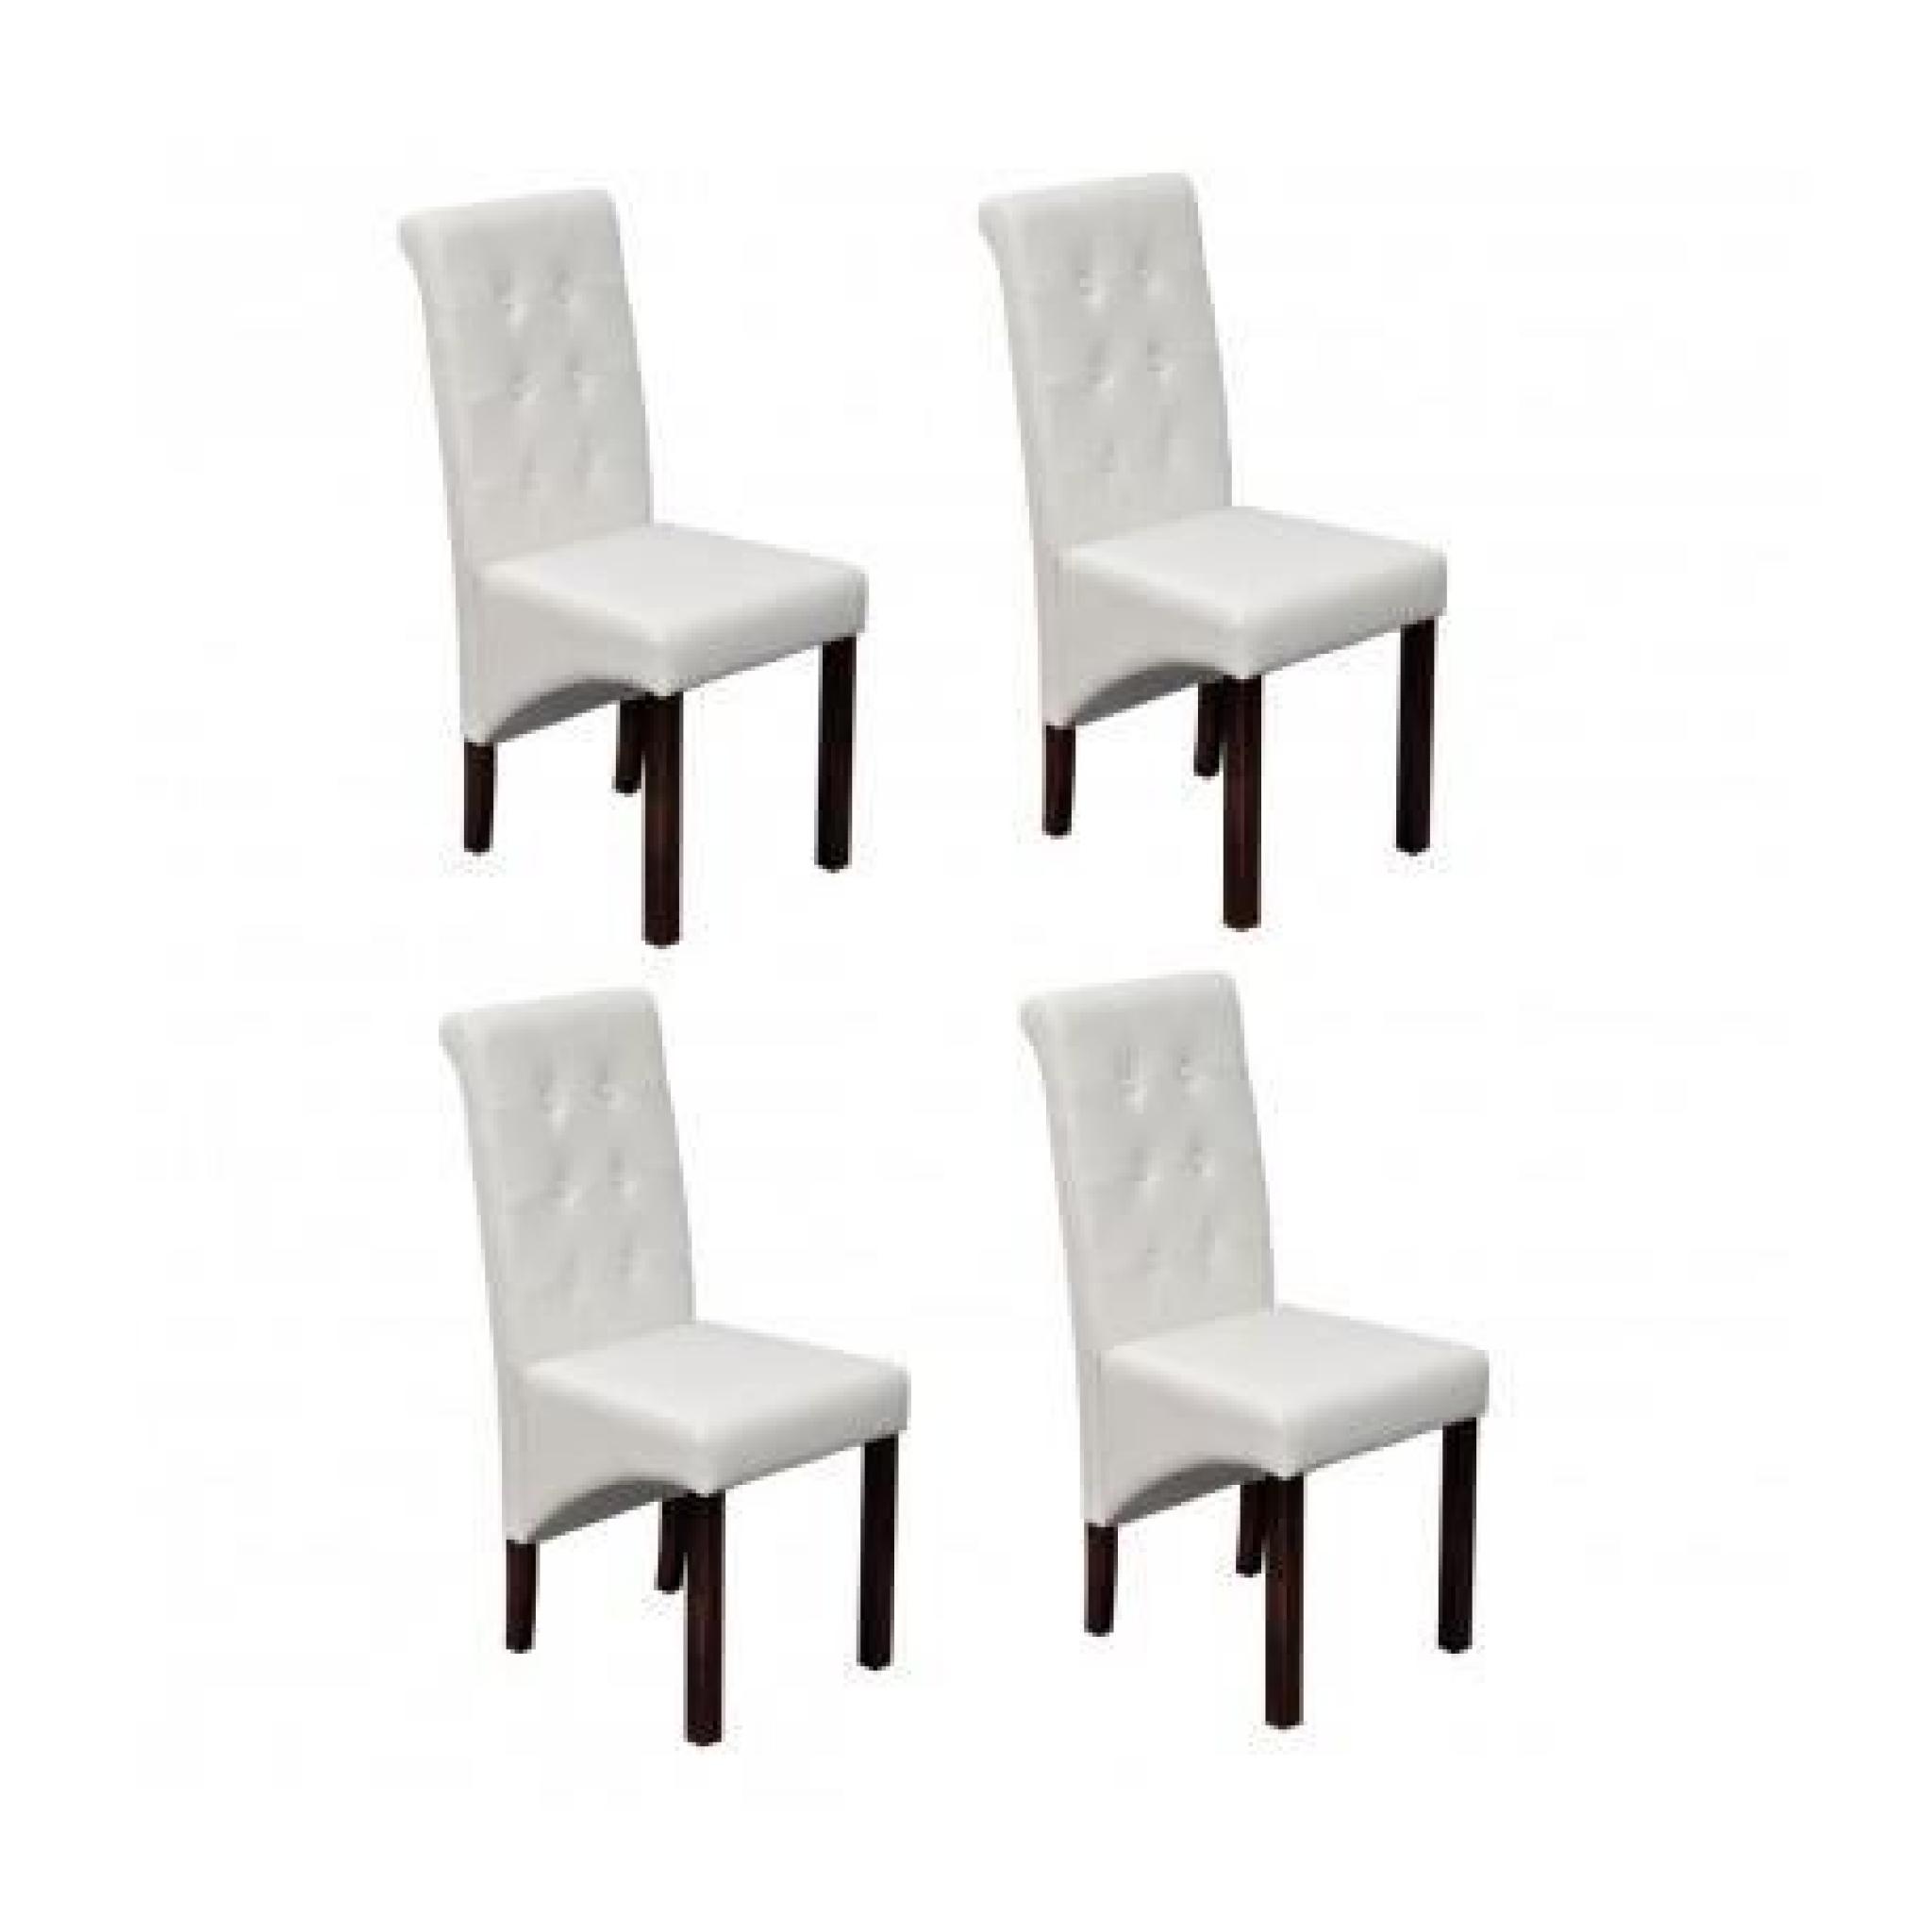 4 Chaises style antique PU blanc Maja+ pas cher